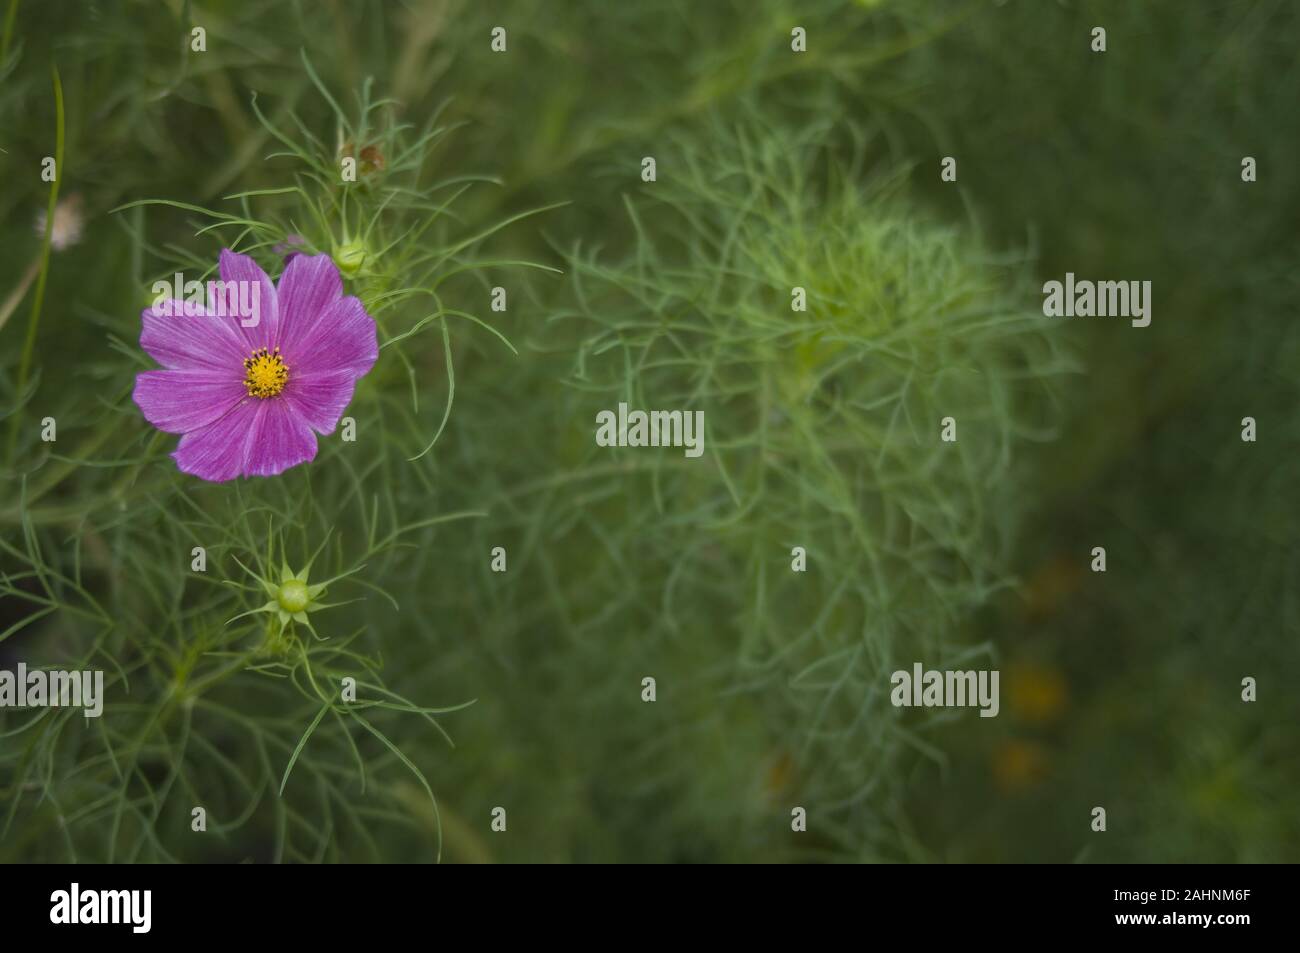 Blume, Cosmos Bipinnatus, Garten Kosmos, mexikanische Aster Stockfoto